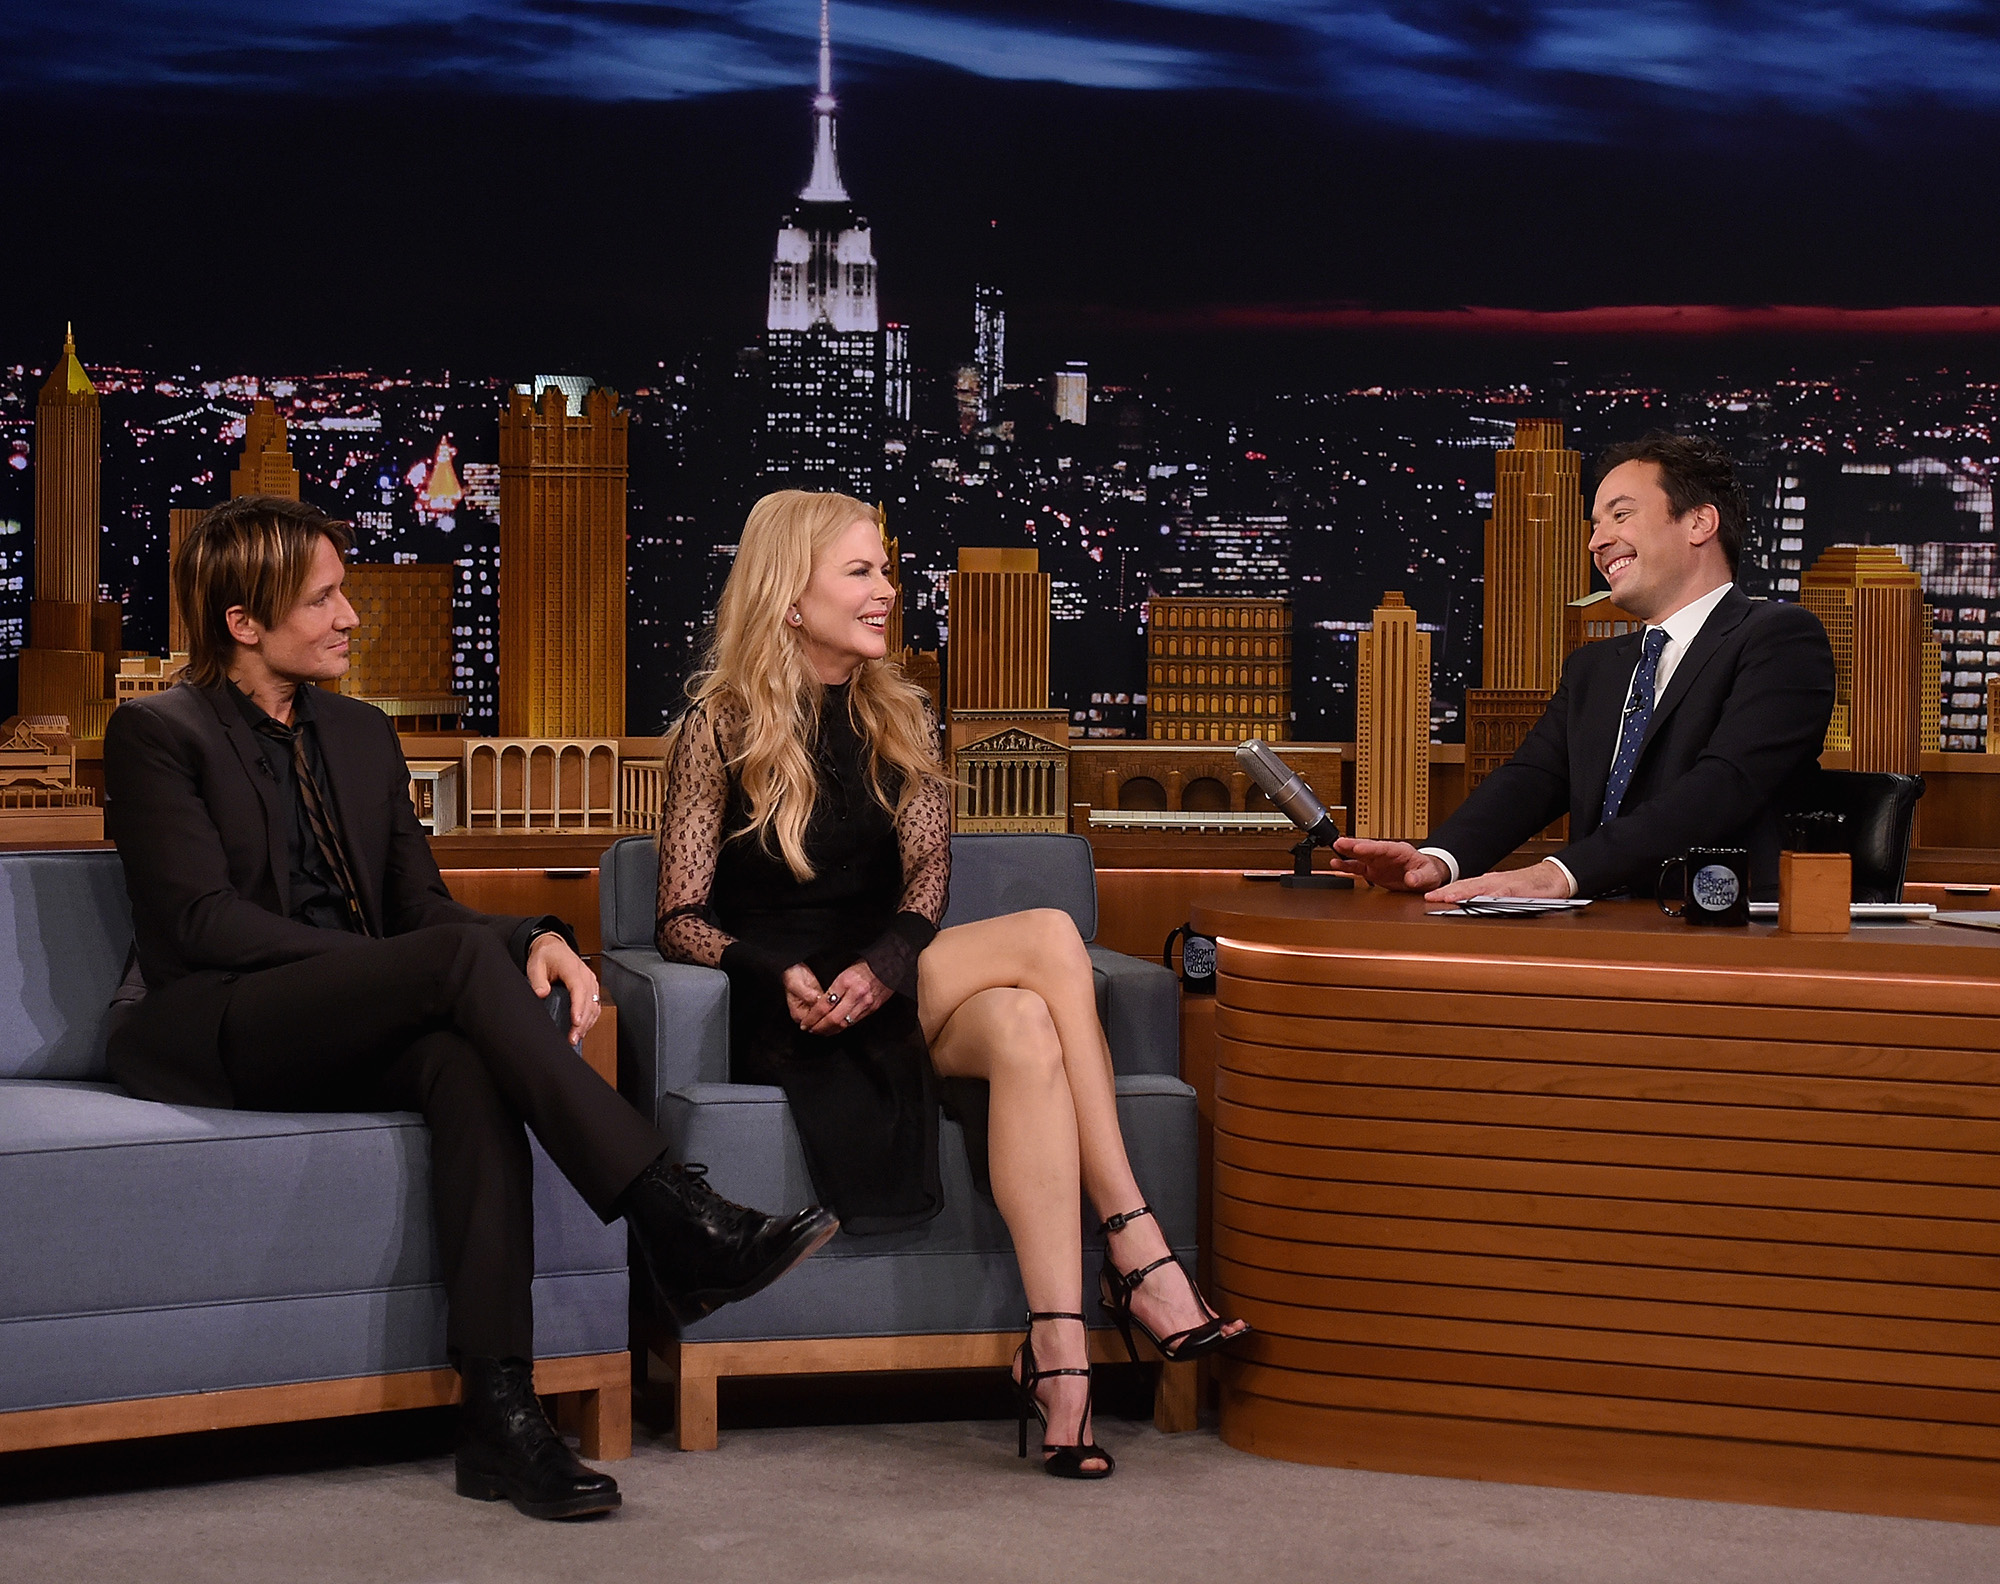 Nicole Kidman Visits "The Tonight Show Starring Jimmy Fallon"